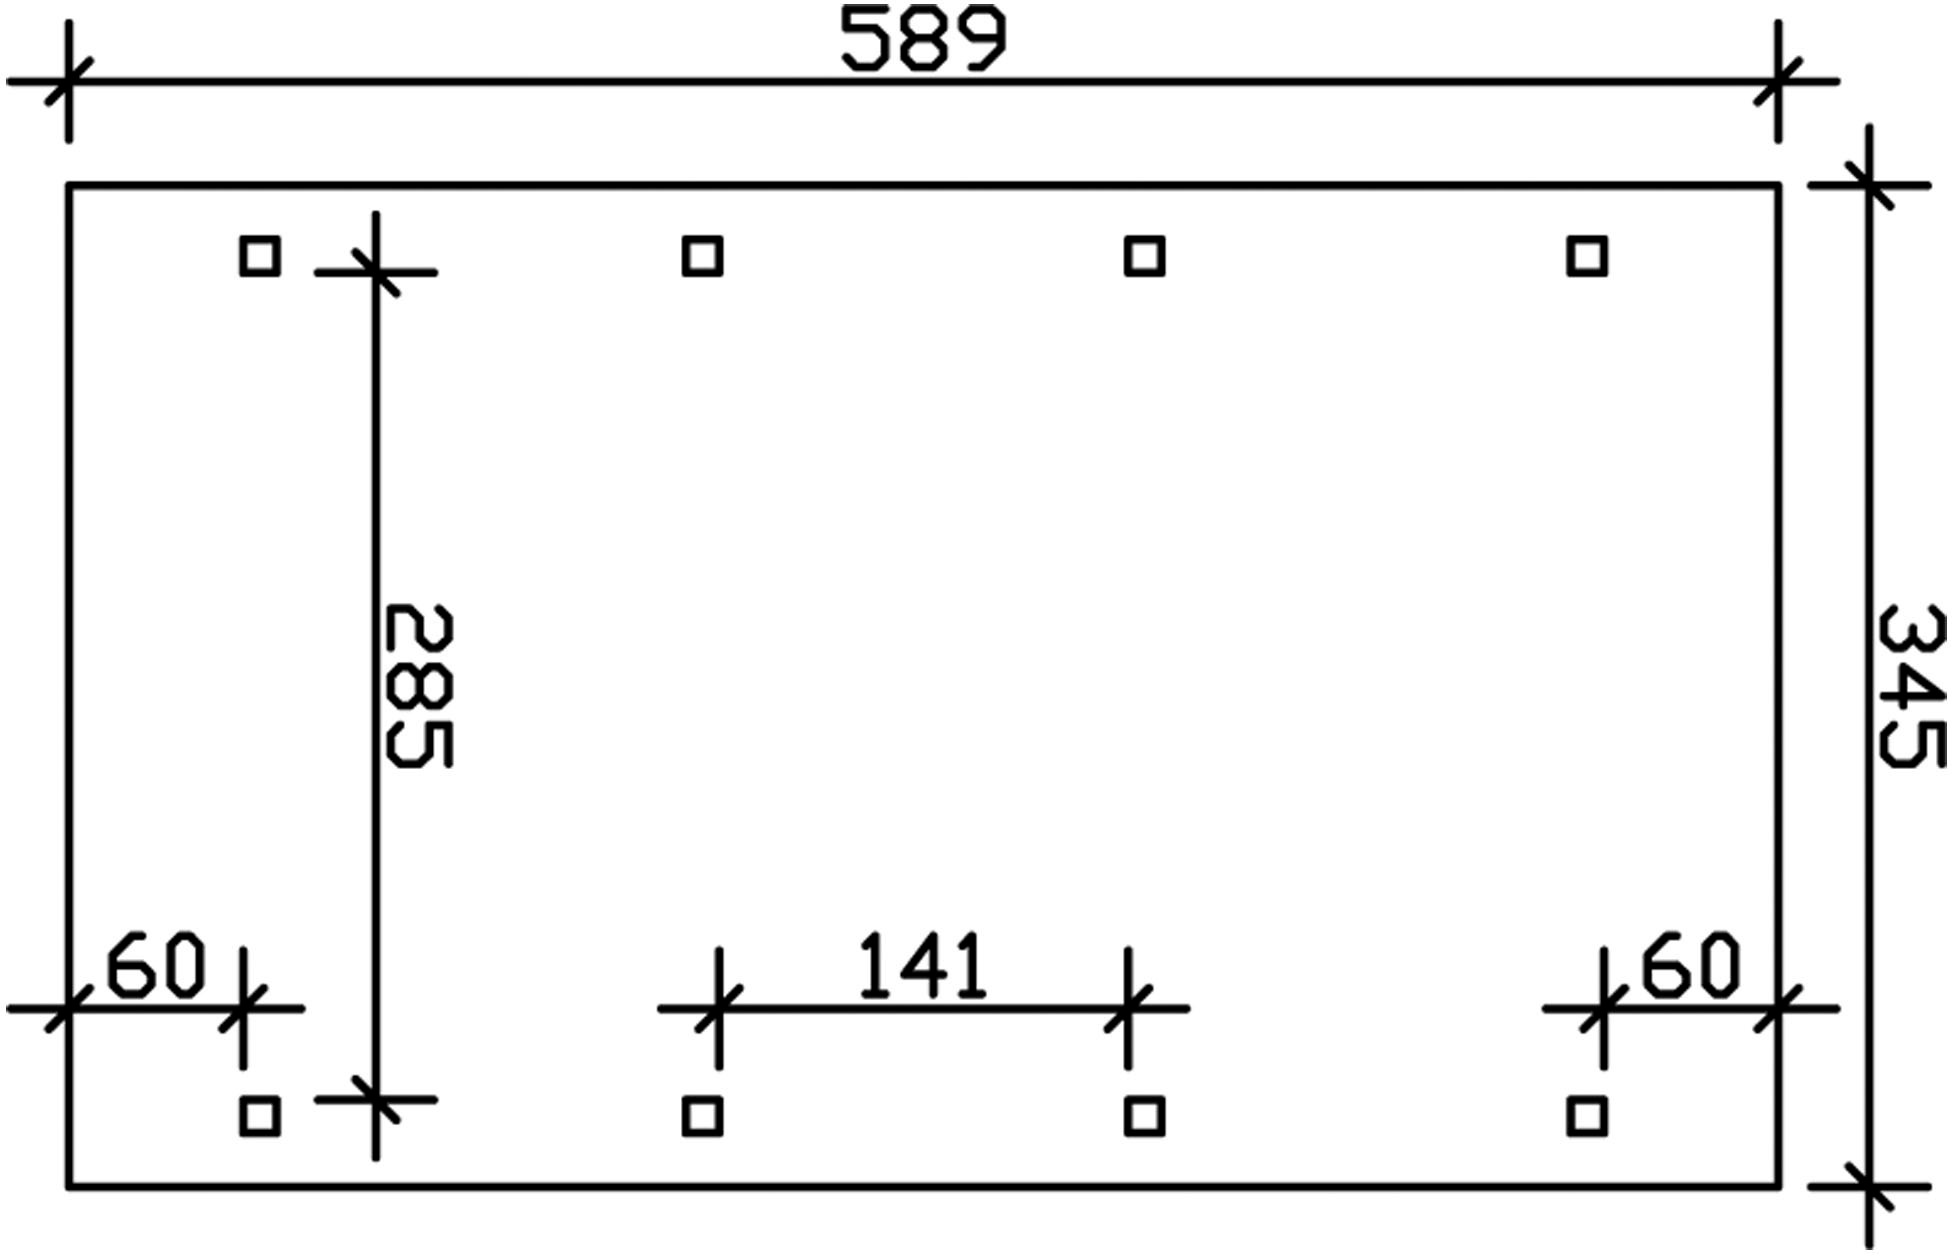 Skanholz Einzelcarport »Spreewald«, Nadelholz, 285 cm, Grün, 345x589cm mit EPDM-Dach, rote Blende